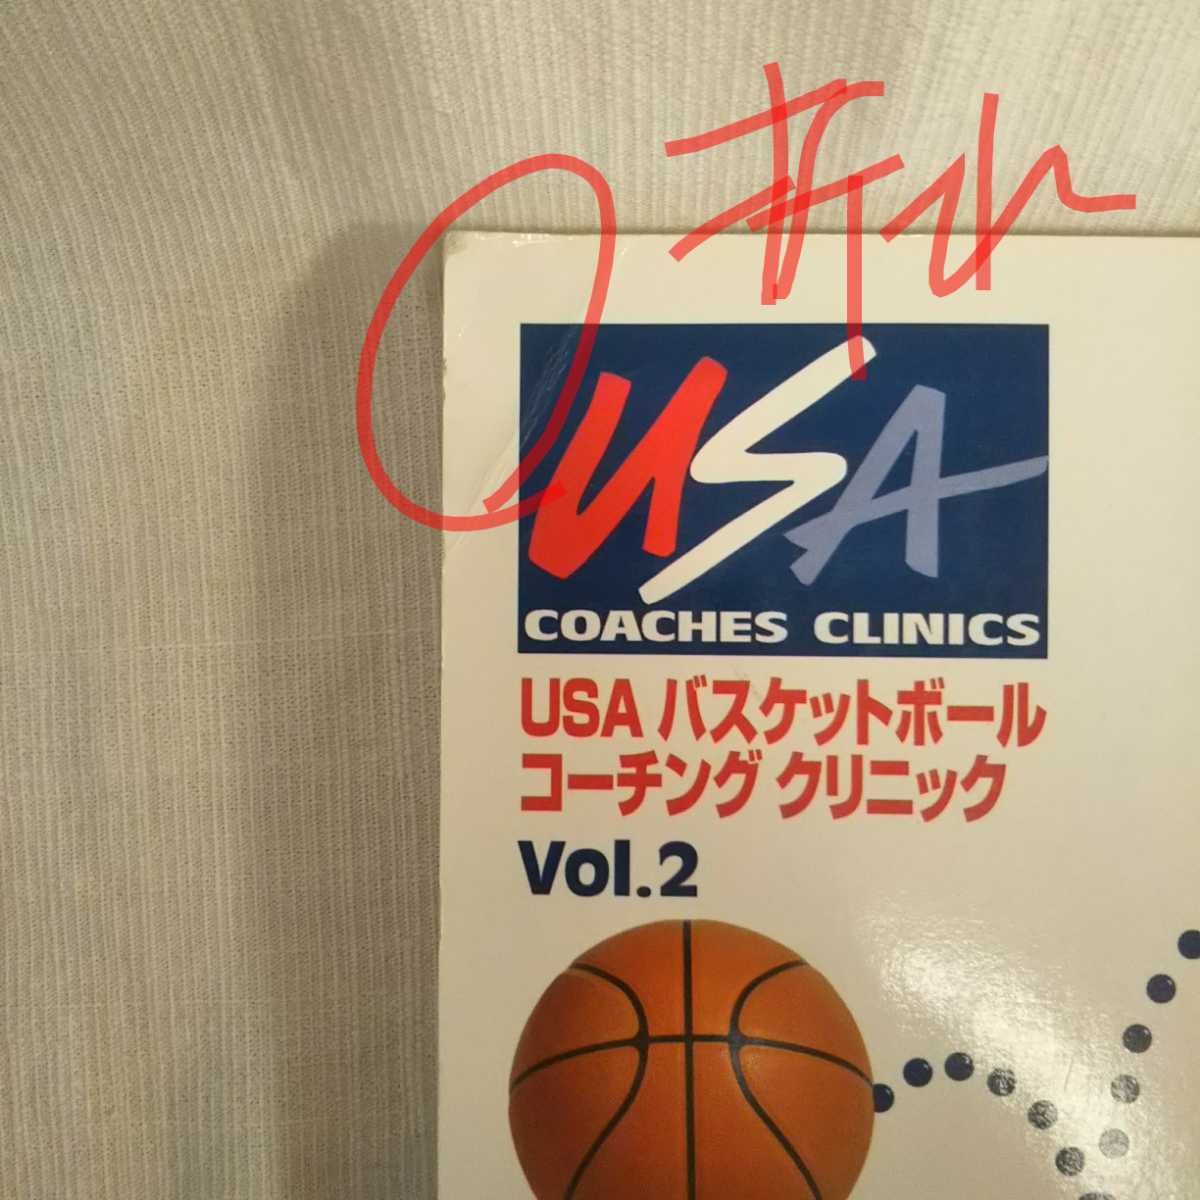 USA баскетбол Coach ngklinikVol.2